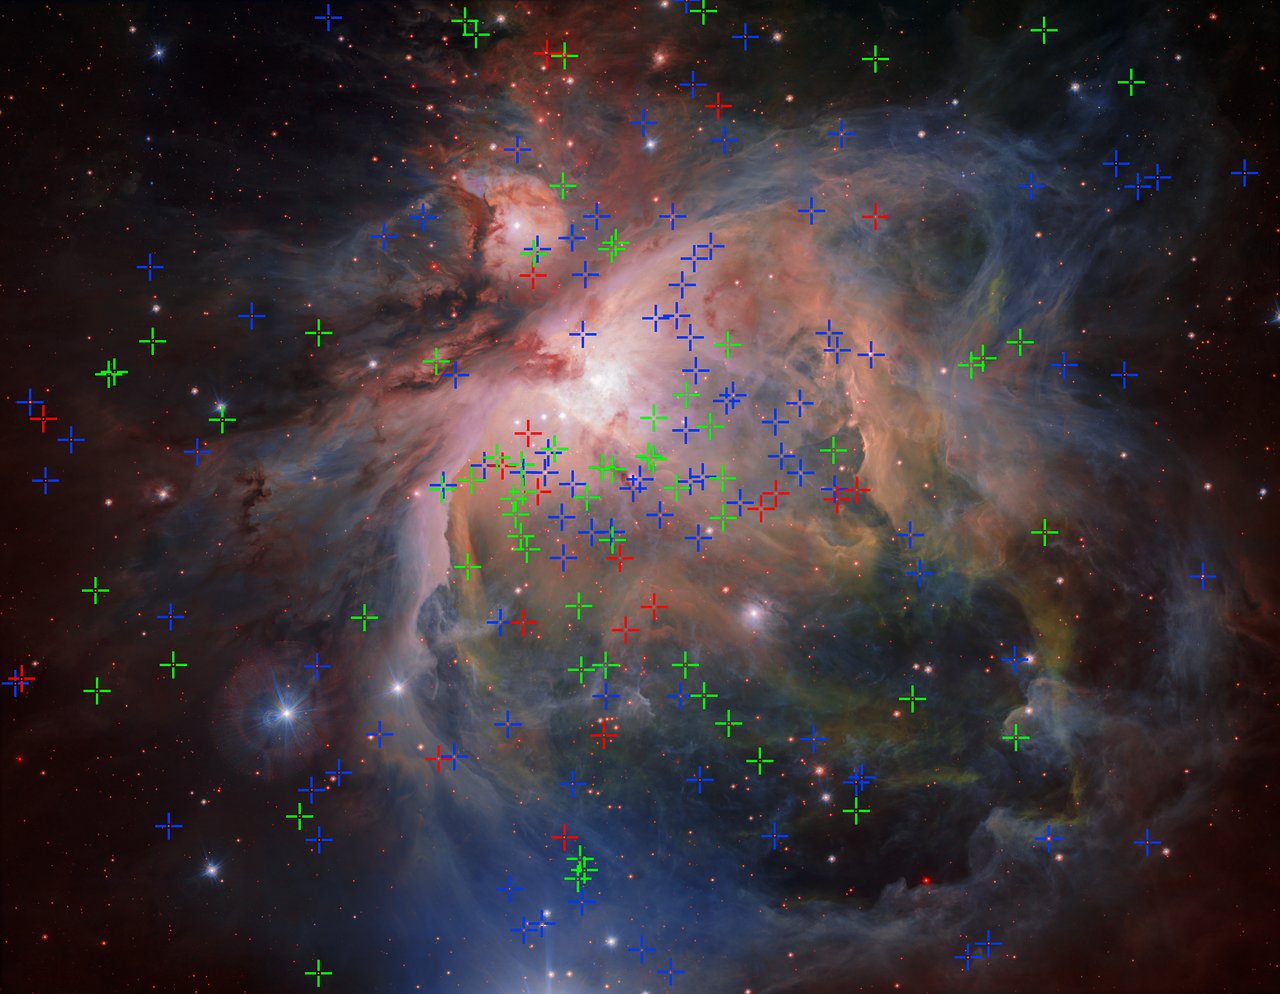 ESO,VLT,VST,M42,Orion Nebula